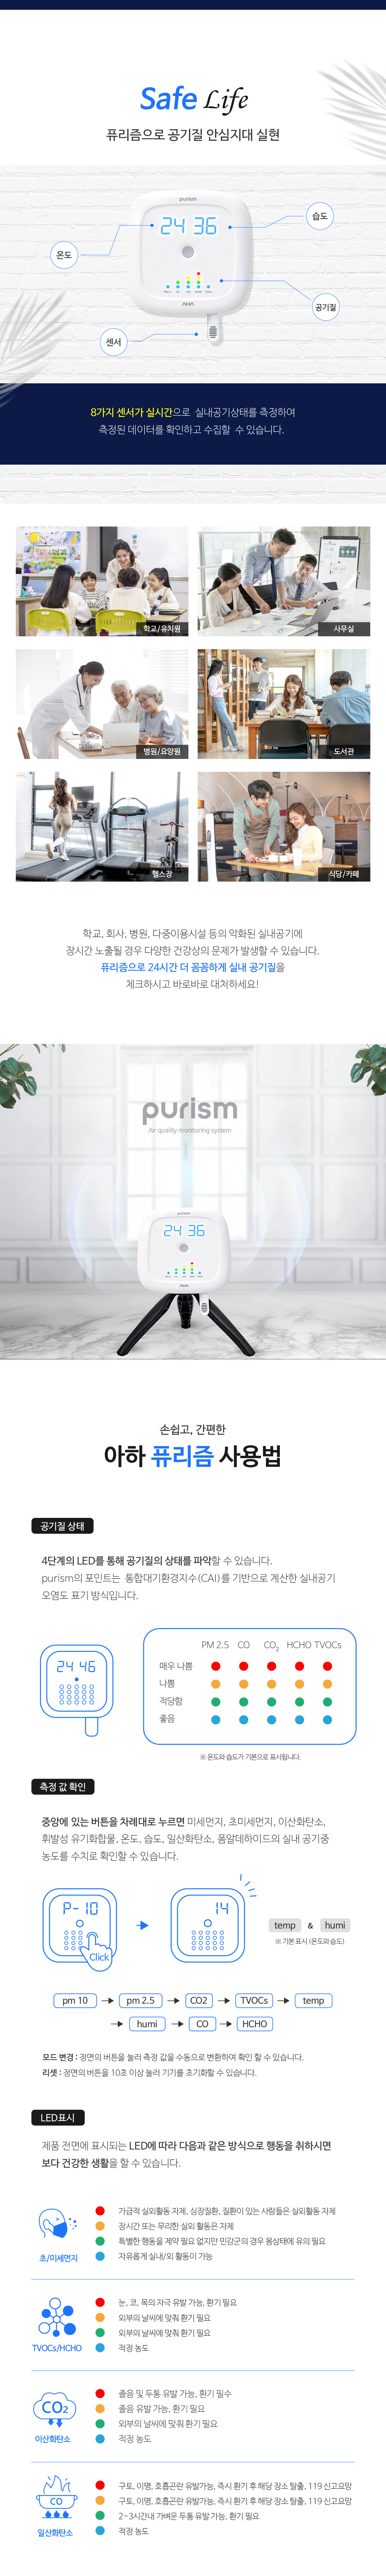 purism_2